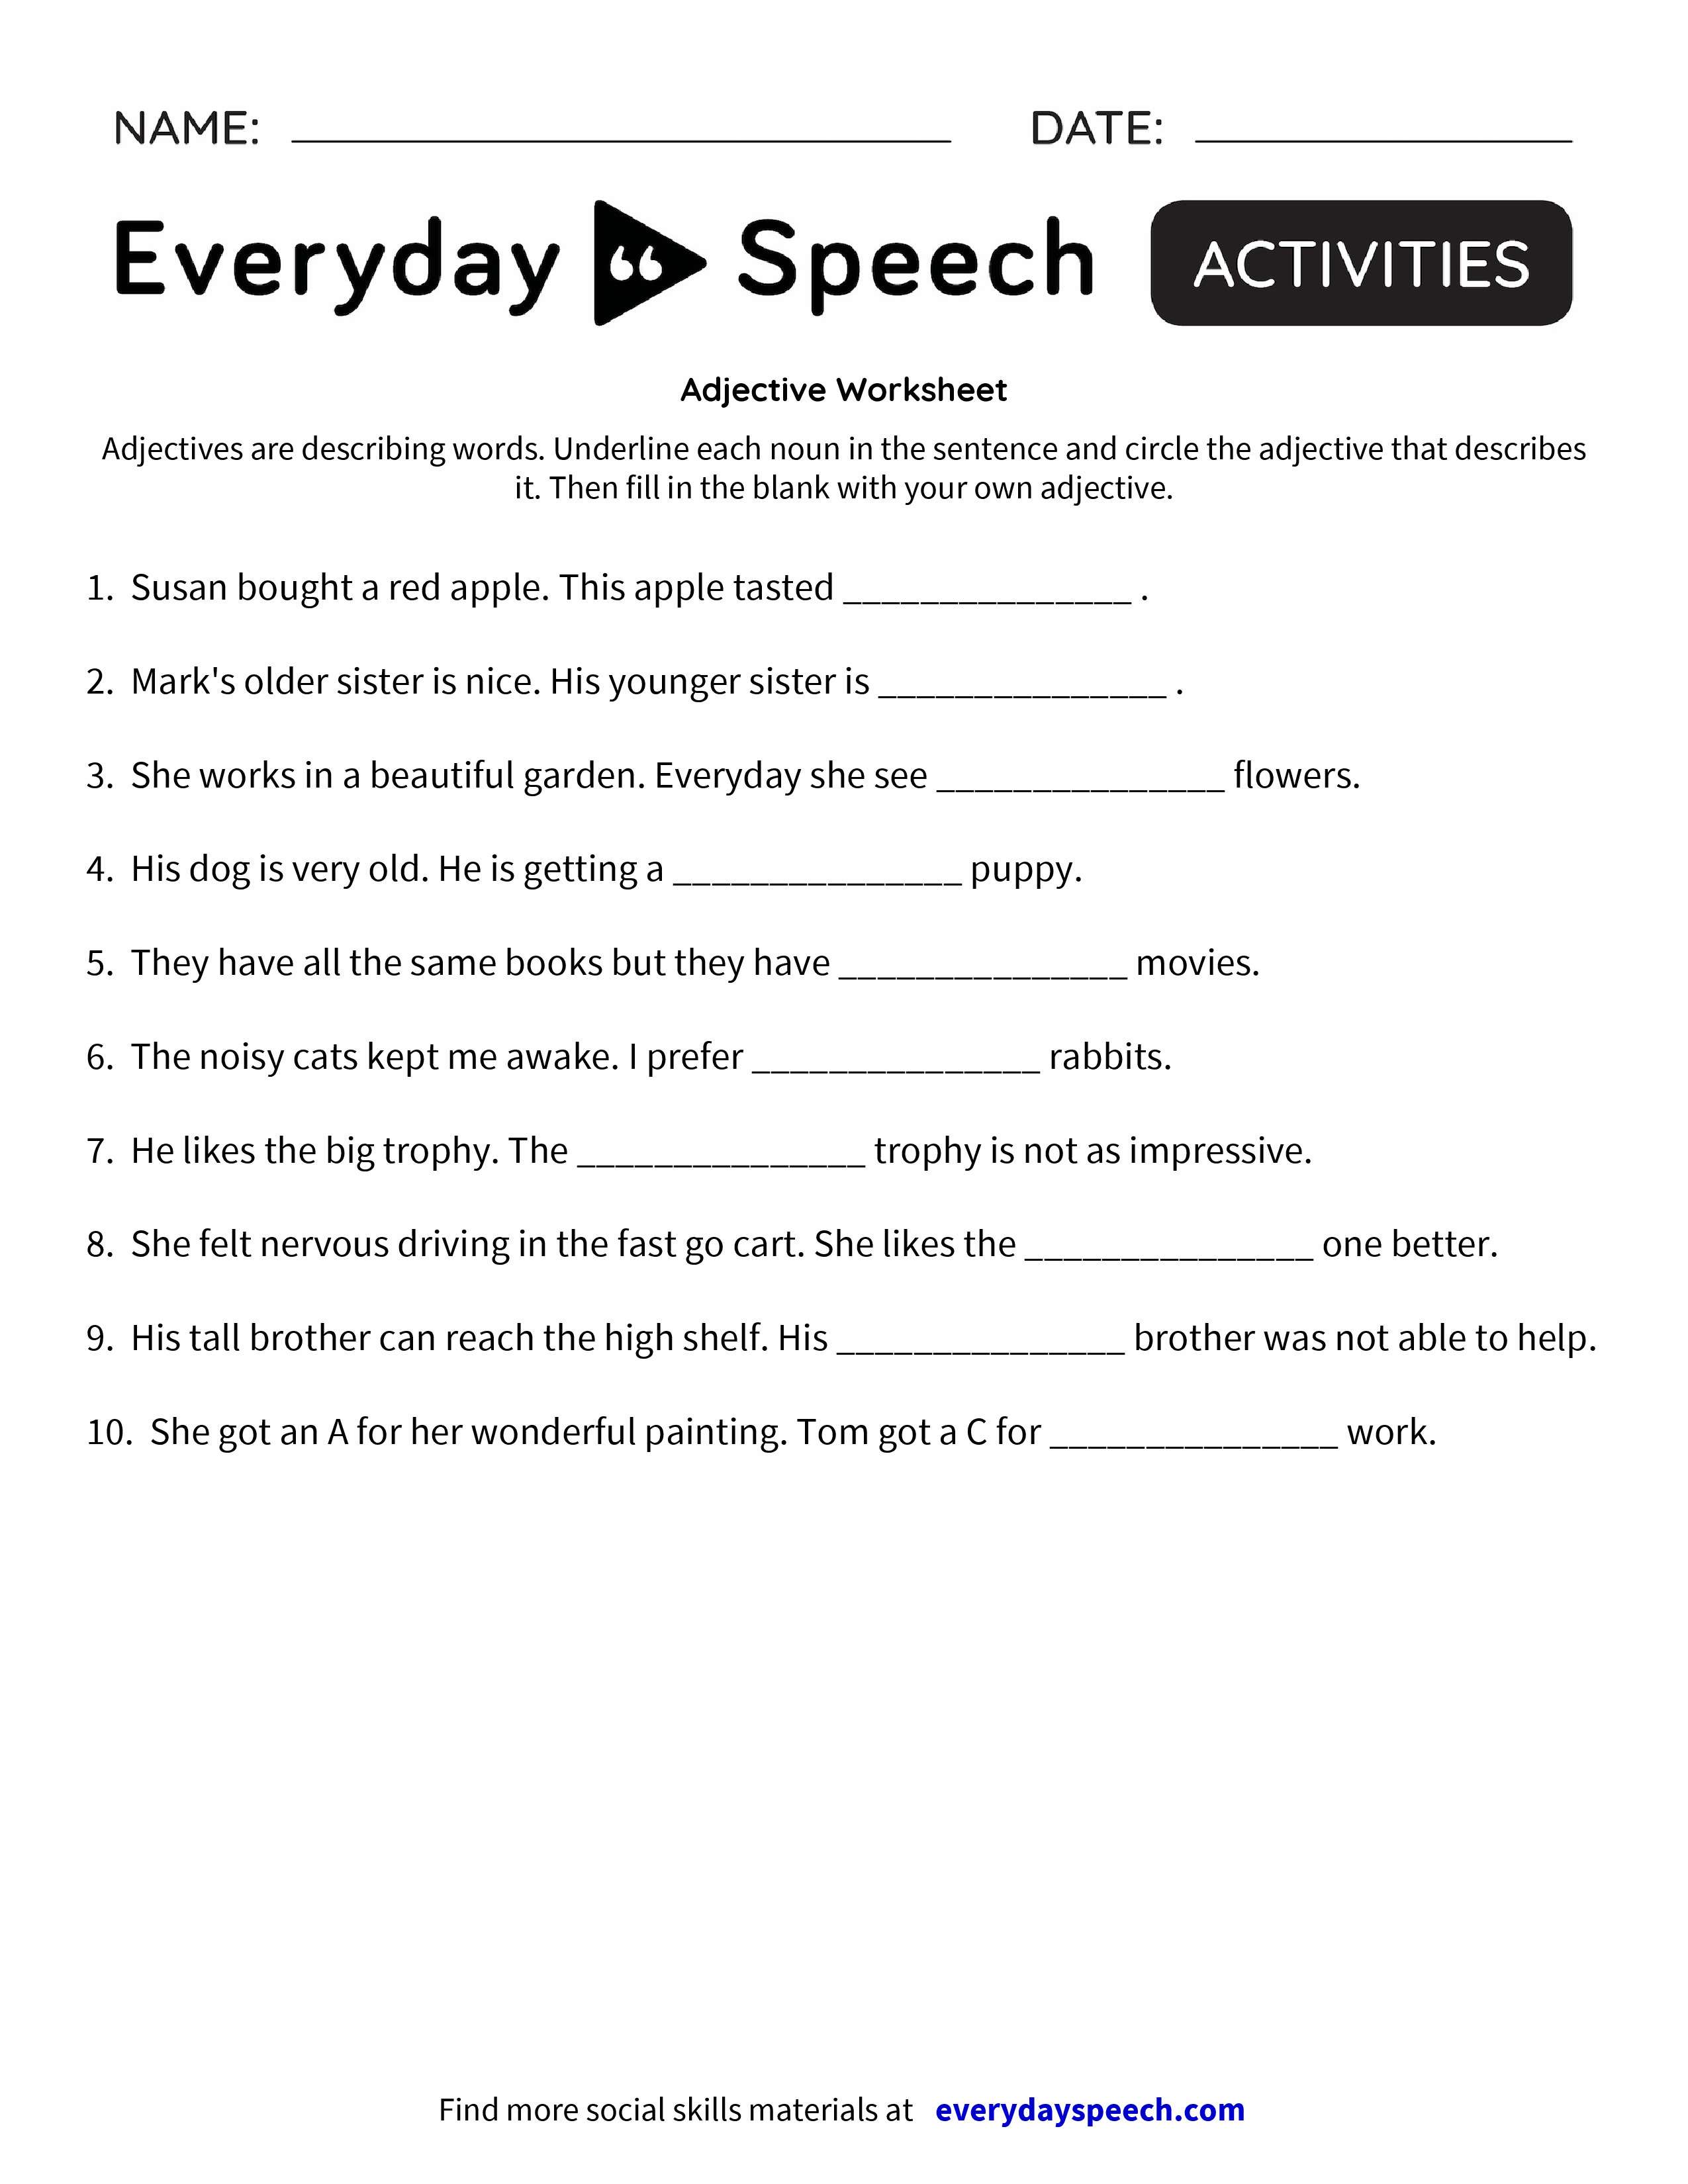 Adjective Worksheet Everyday Speech Everyday Speech